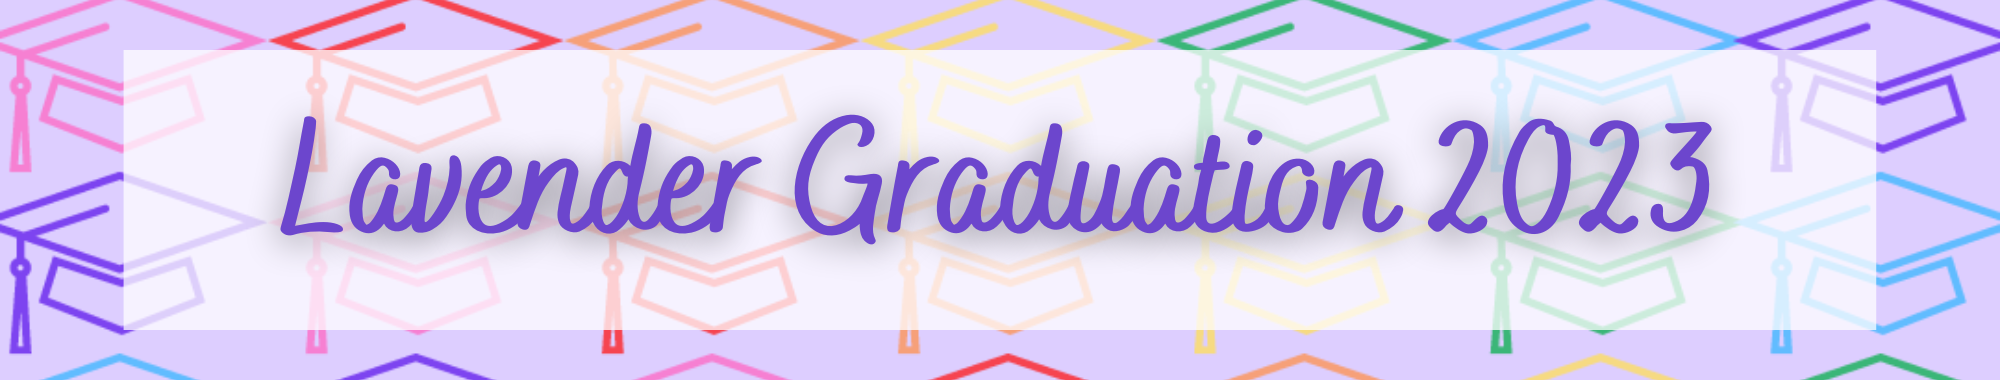 Purple text in front of rainbow graduation caps reads: Lavender Graduation 2023